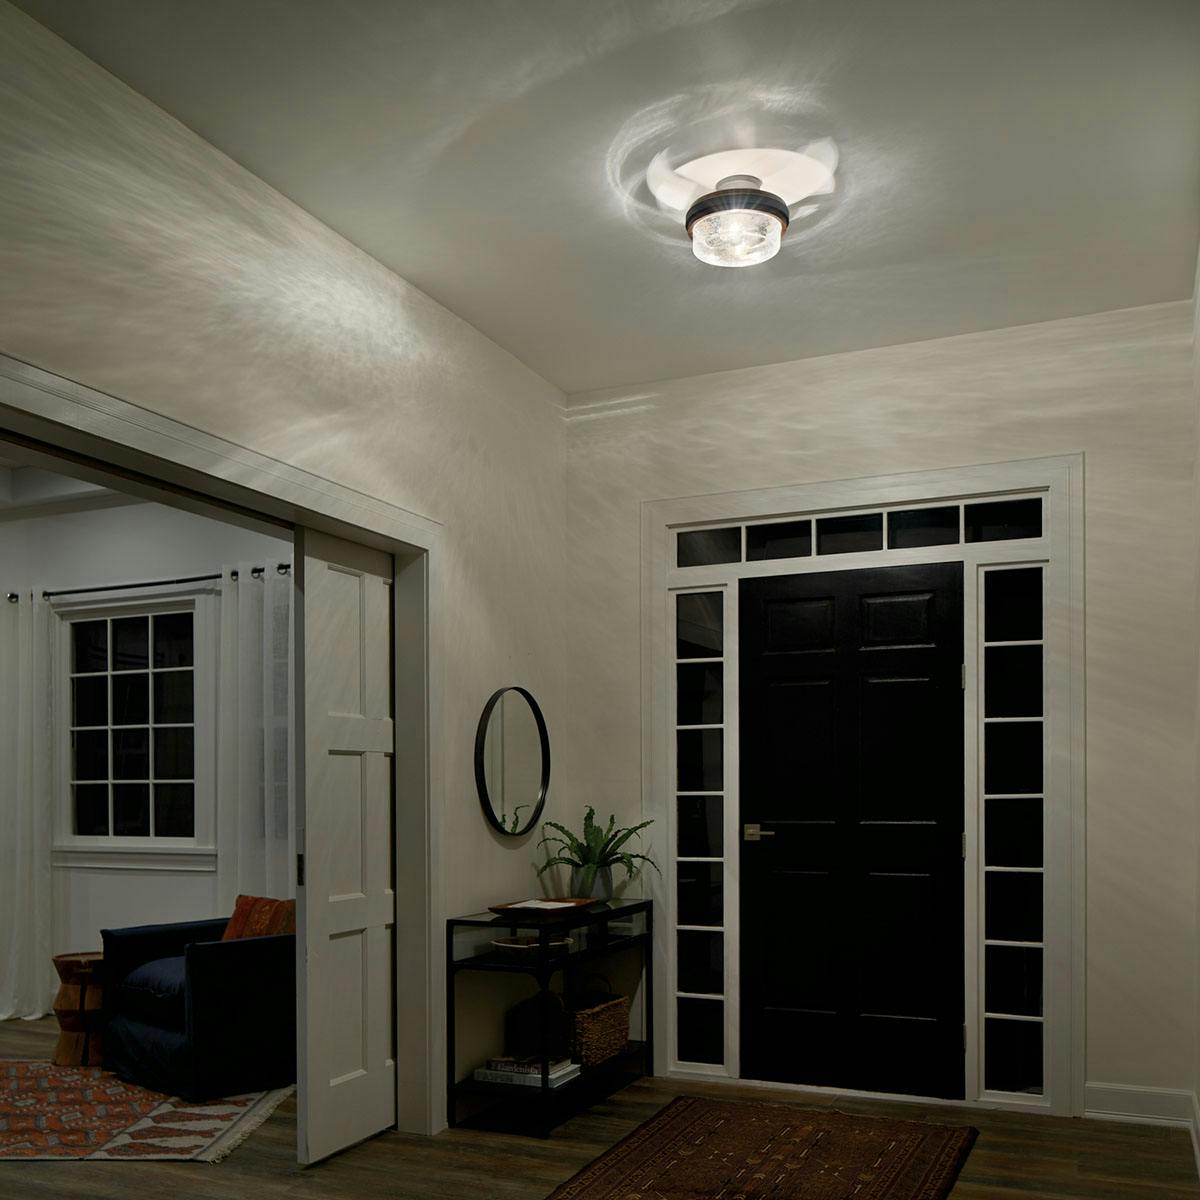 Night time Hallway image featuring Grand Bank flush mount light 44100AUB